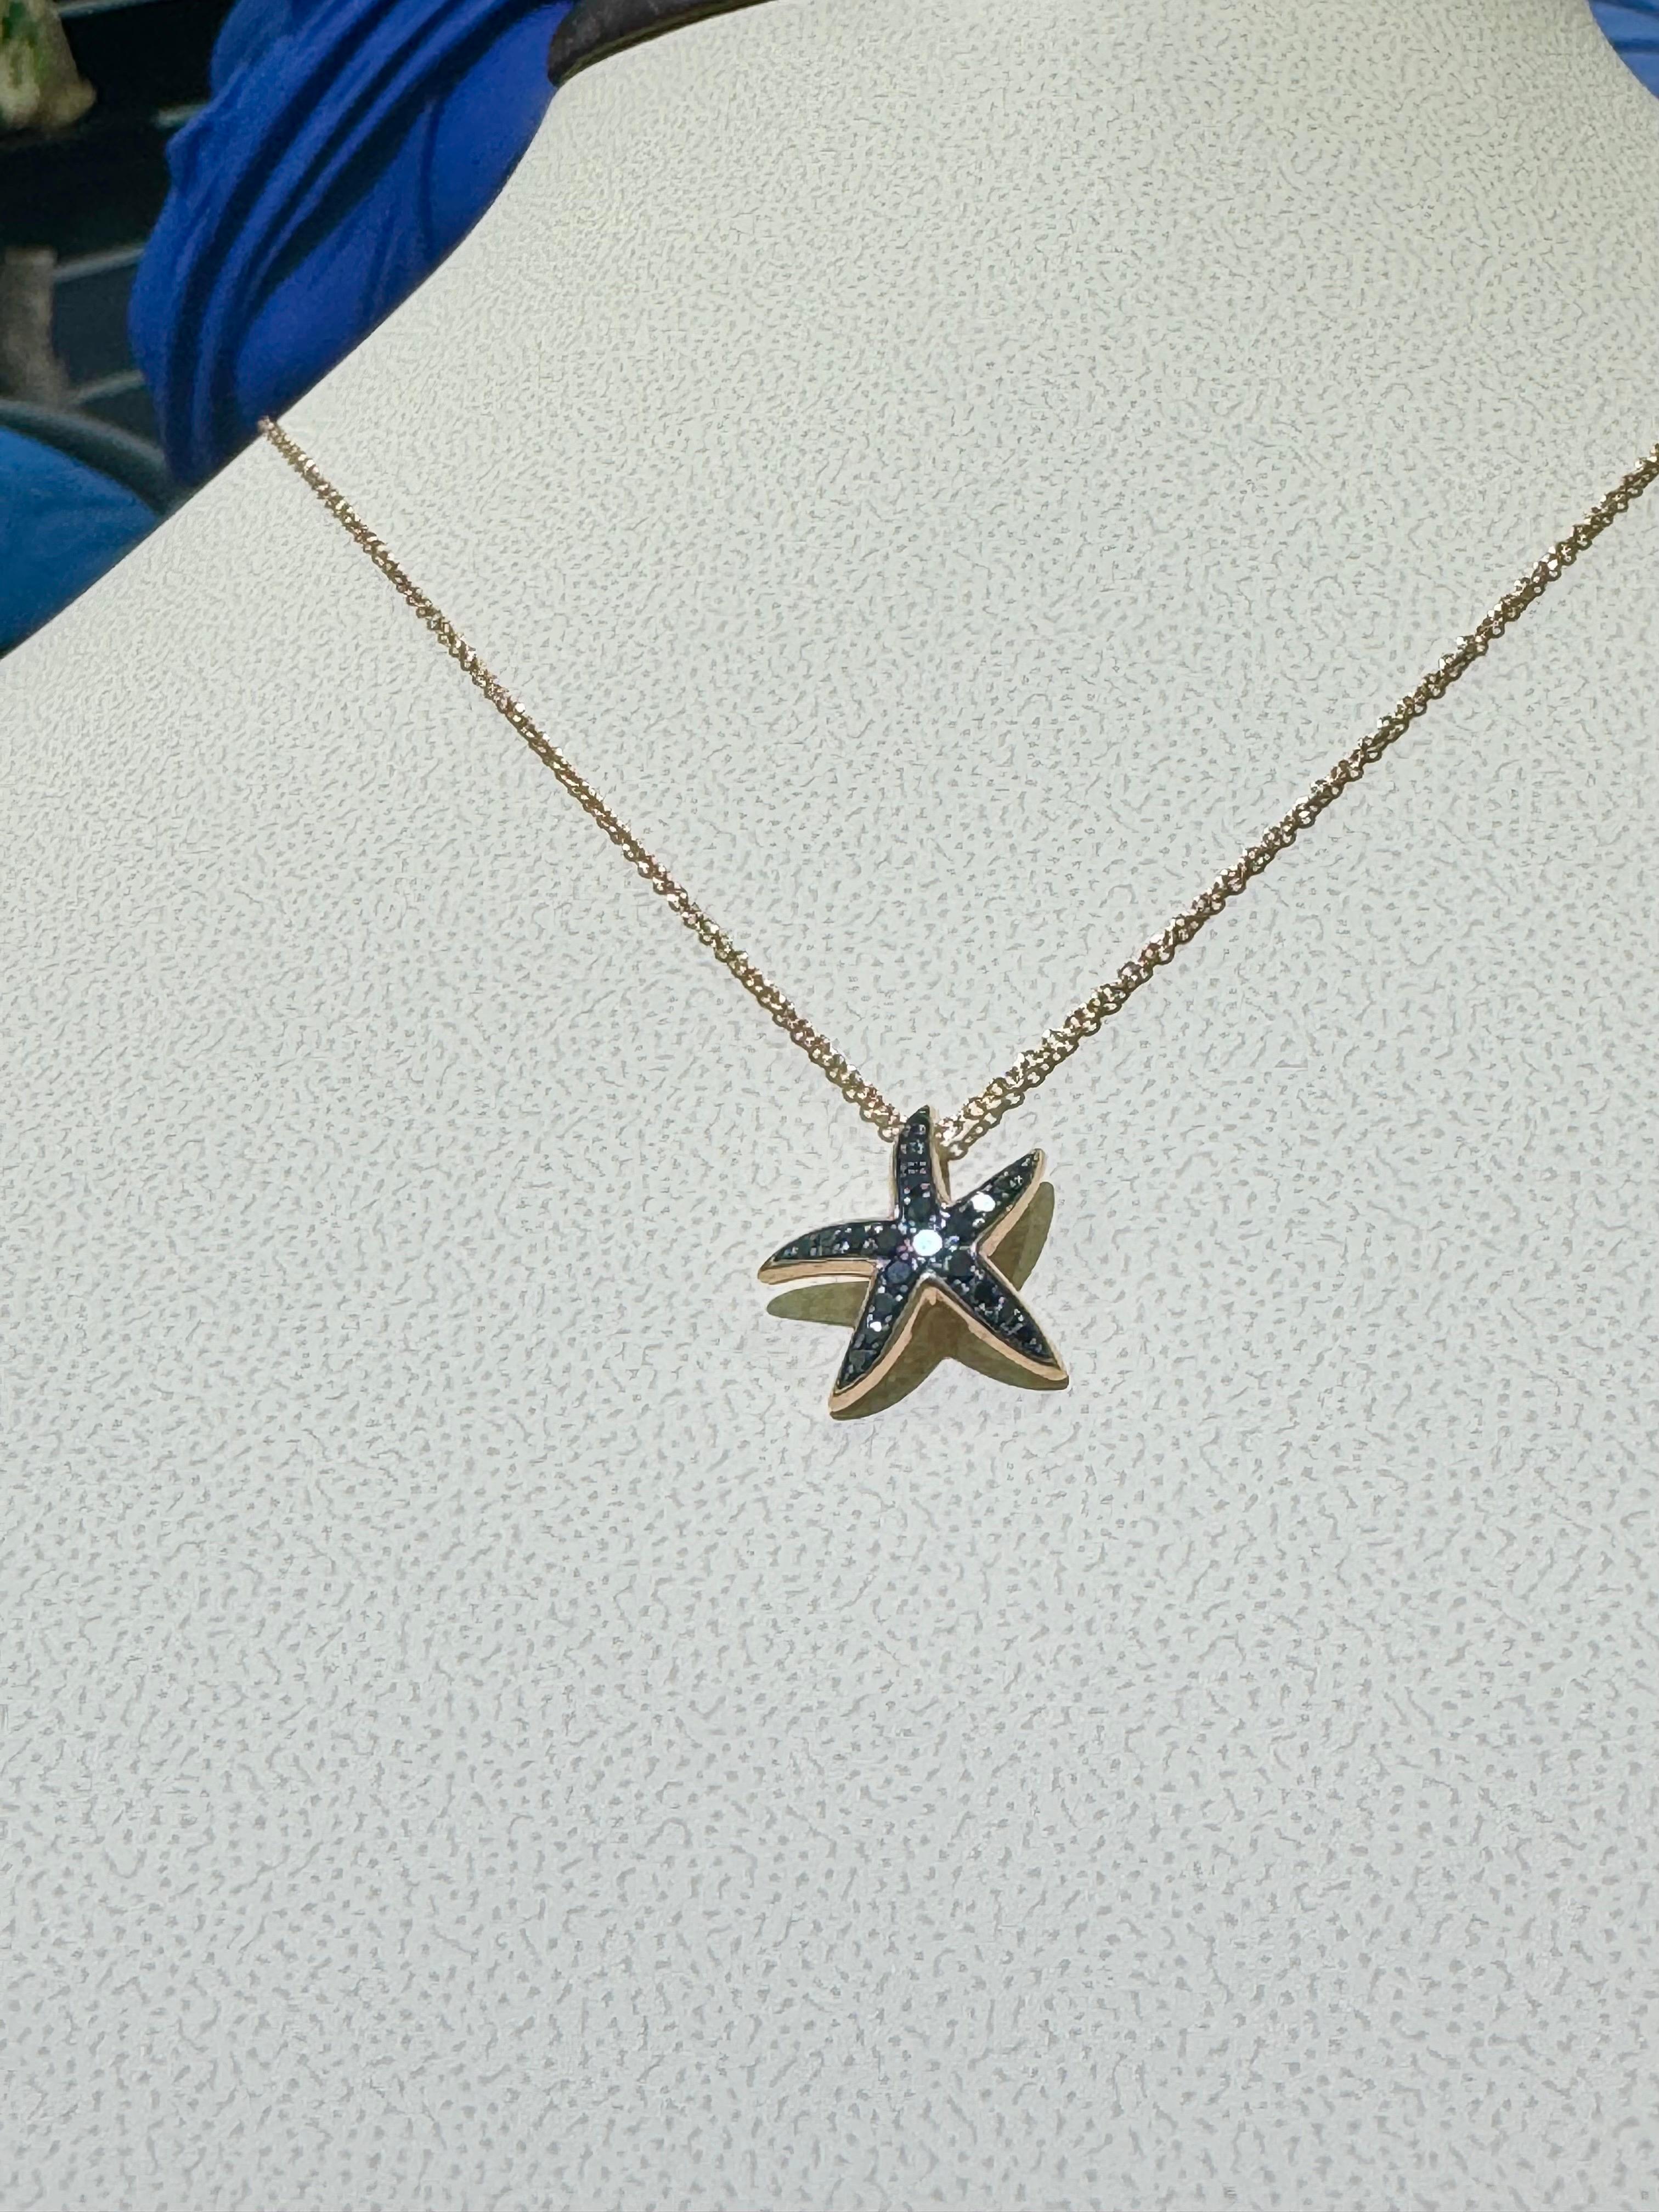 Beautiful Effy Black Diamond Sea Star In 14k Rose Gold .

0.29 carats in black diamonds,

Length is adjustable 16” or 18”